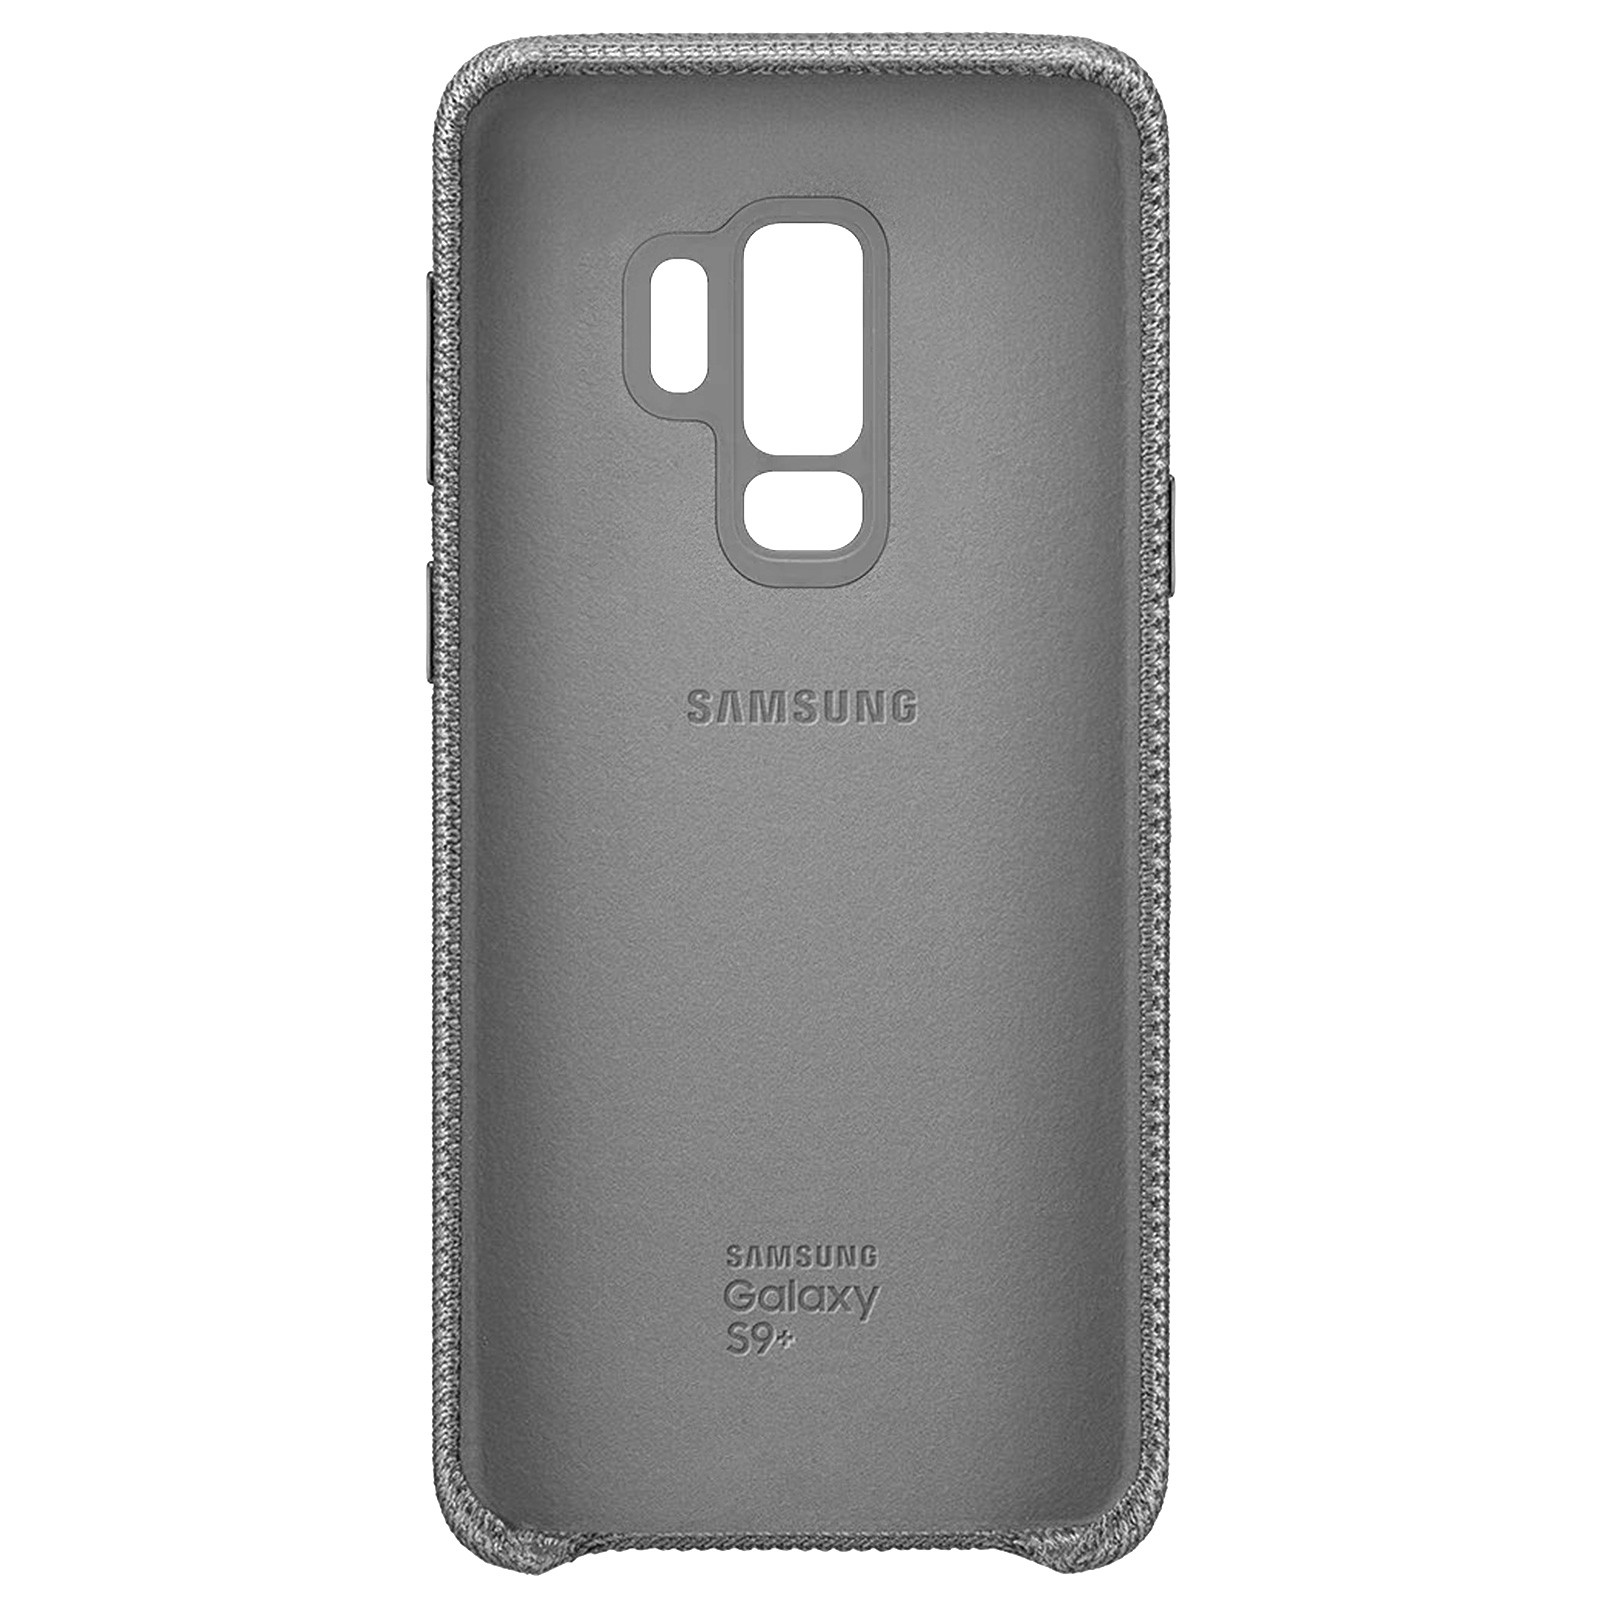 SAMSUNG EF-GG965FJ Series, Reisekoffer, Galaxy Grau Samsung, Plus, S9